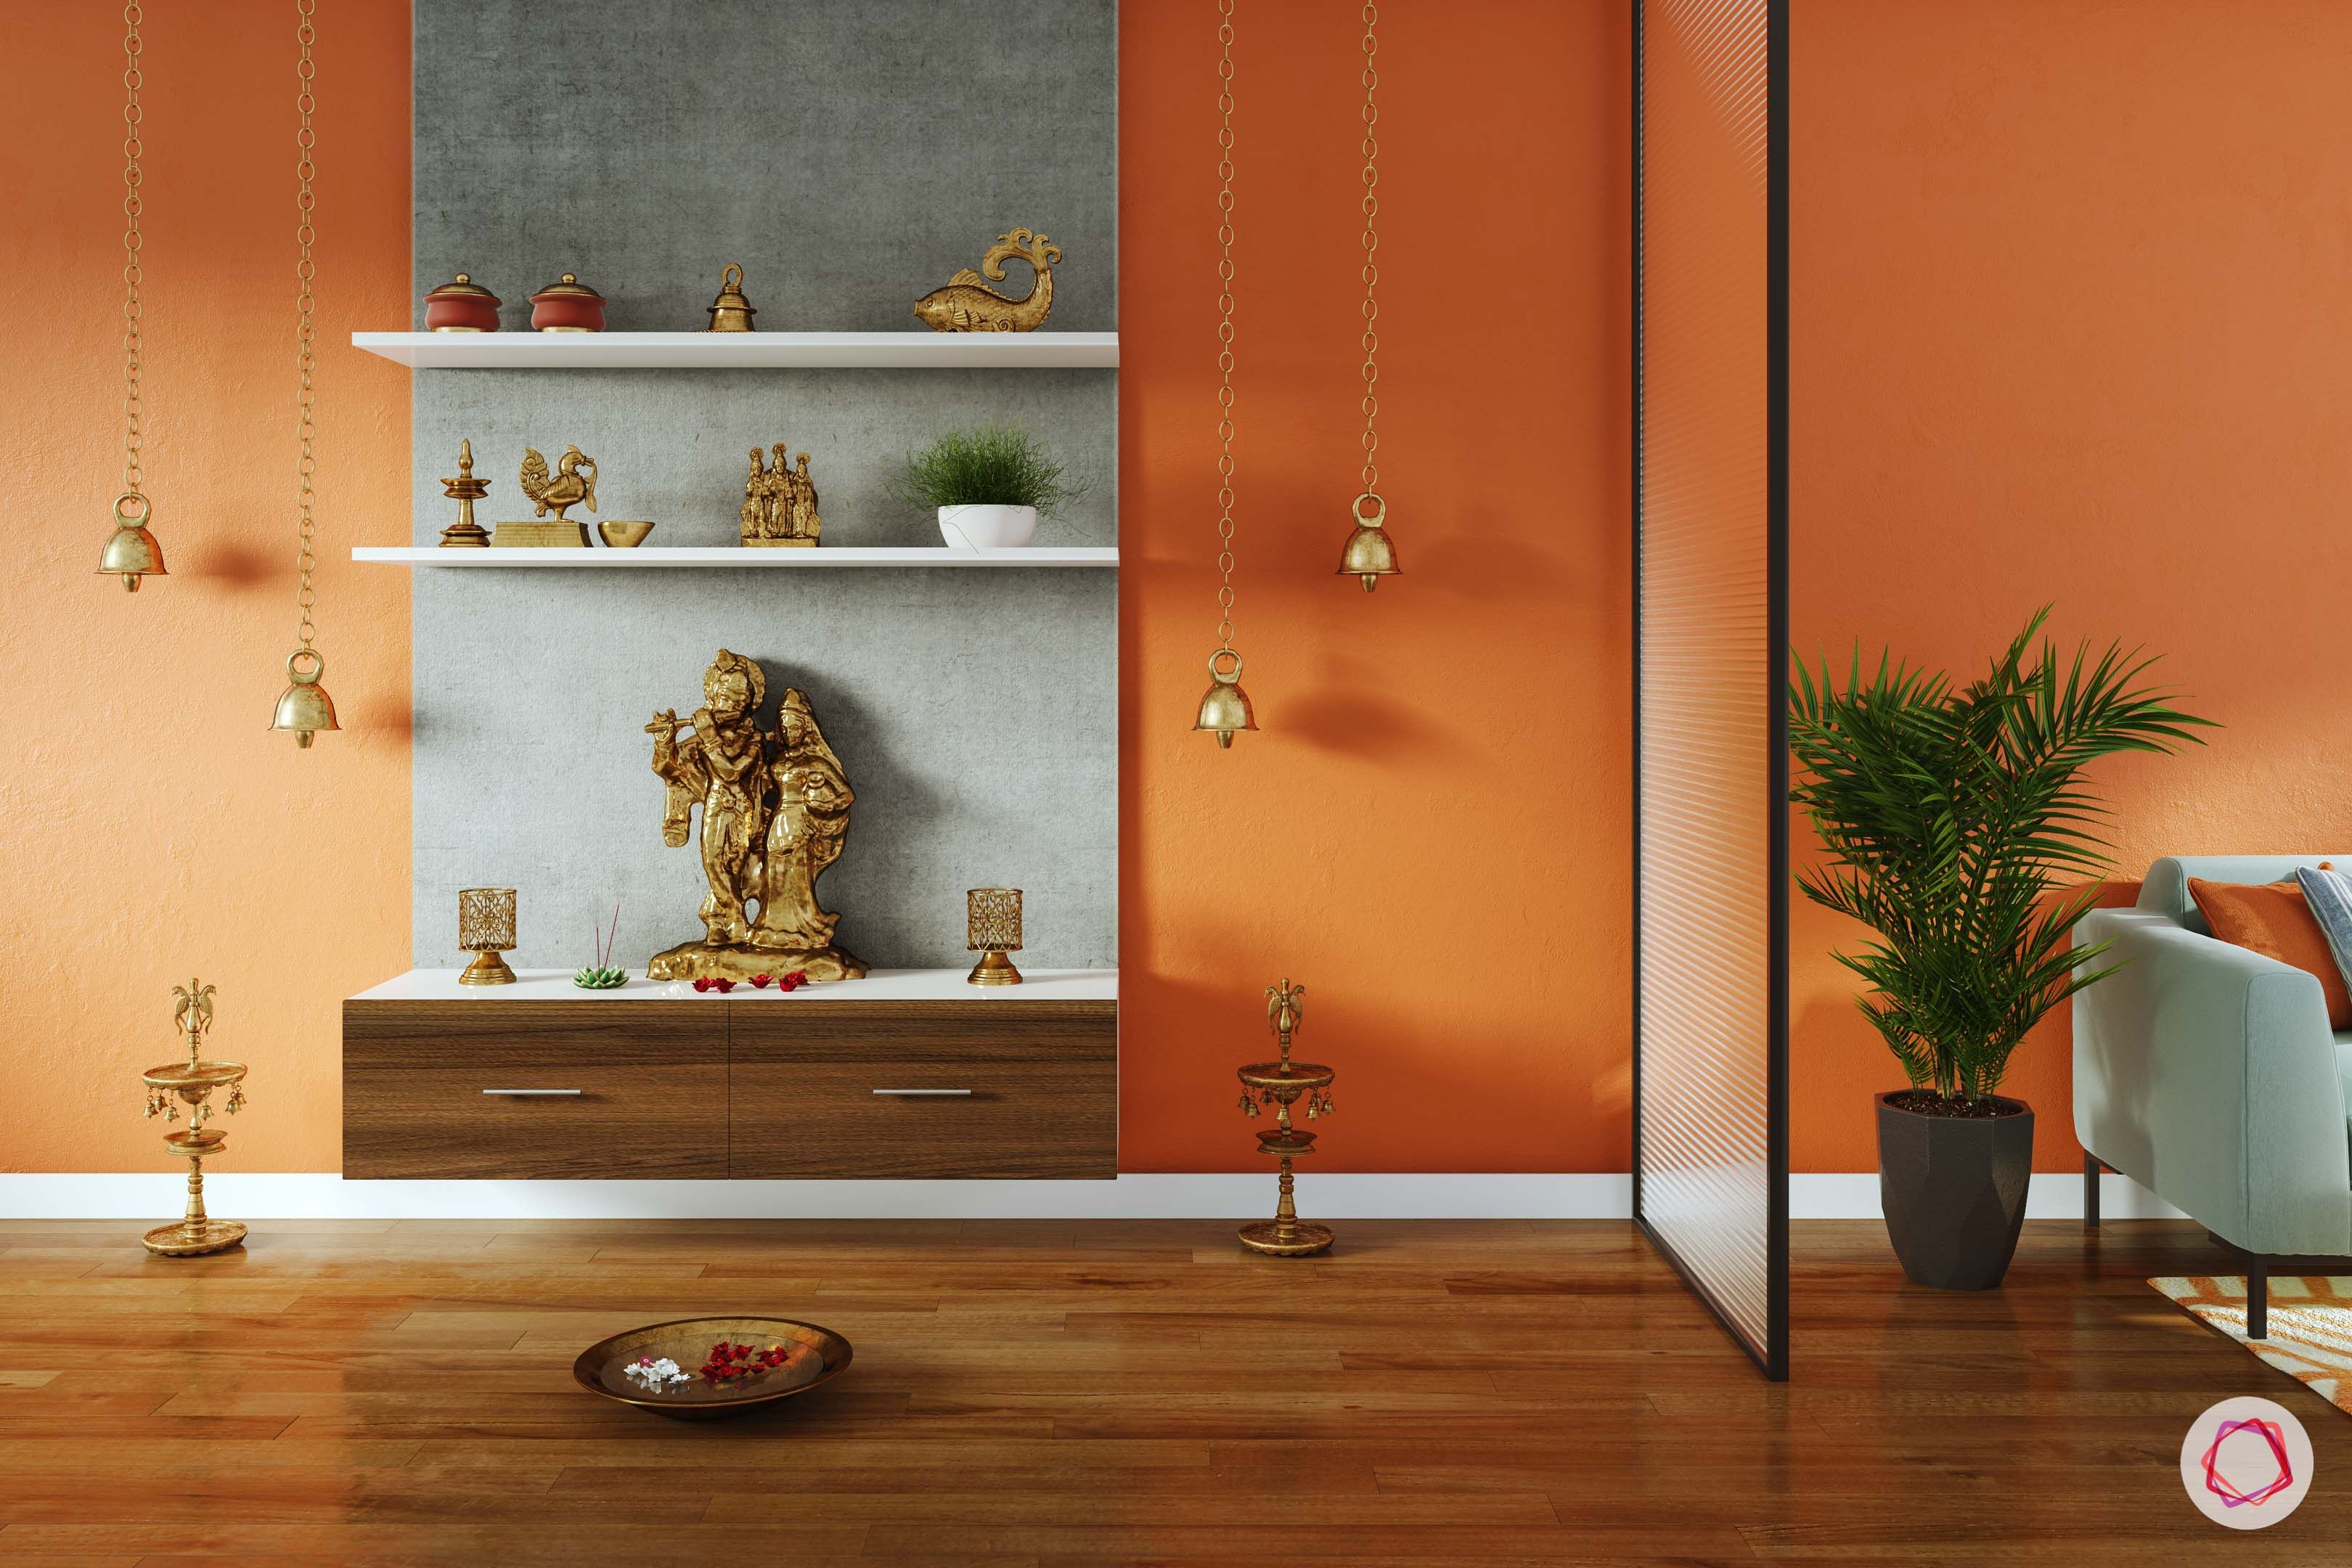 simple pooja mandir designs for walls_glass screen_divider_pooja unit in living room_orange walls_display shelves